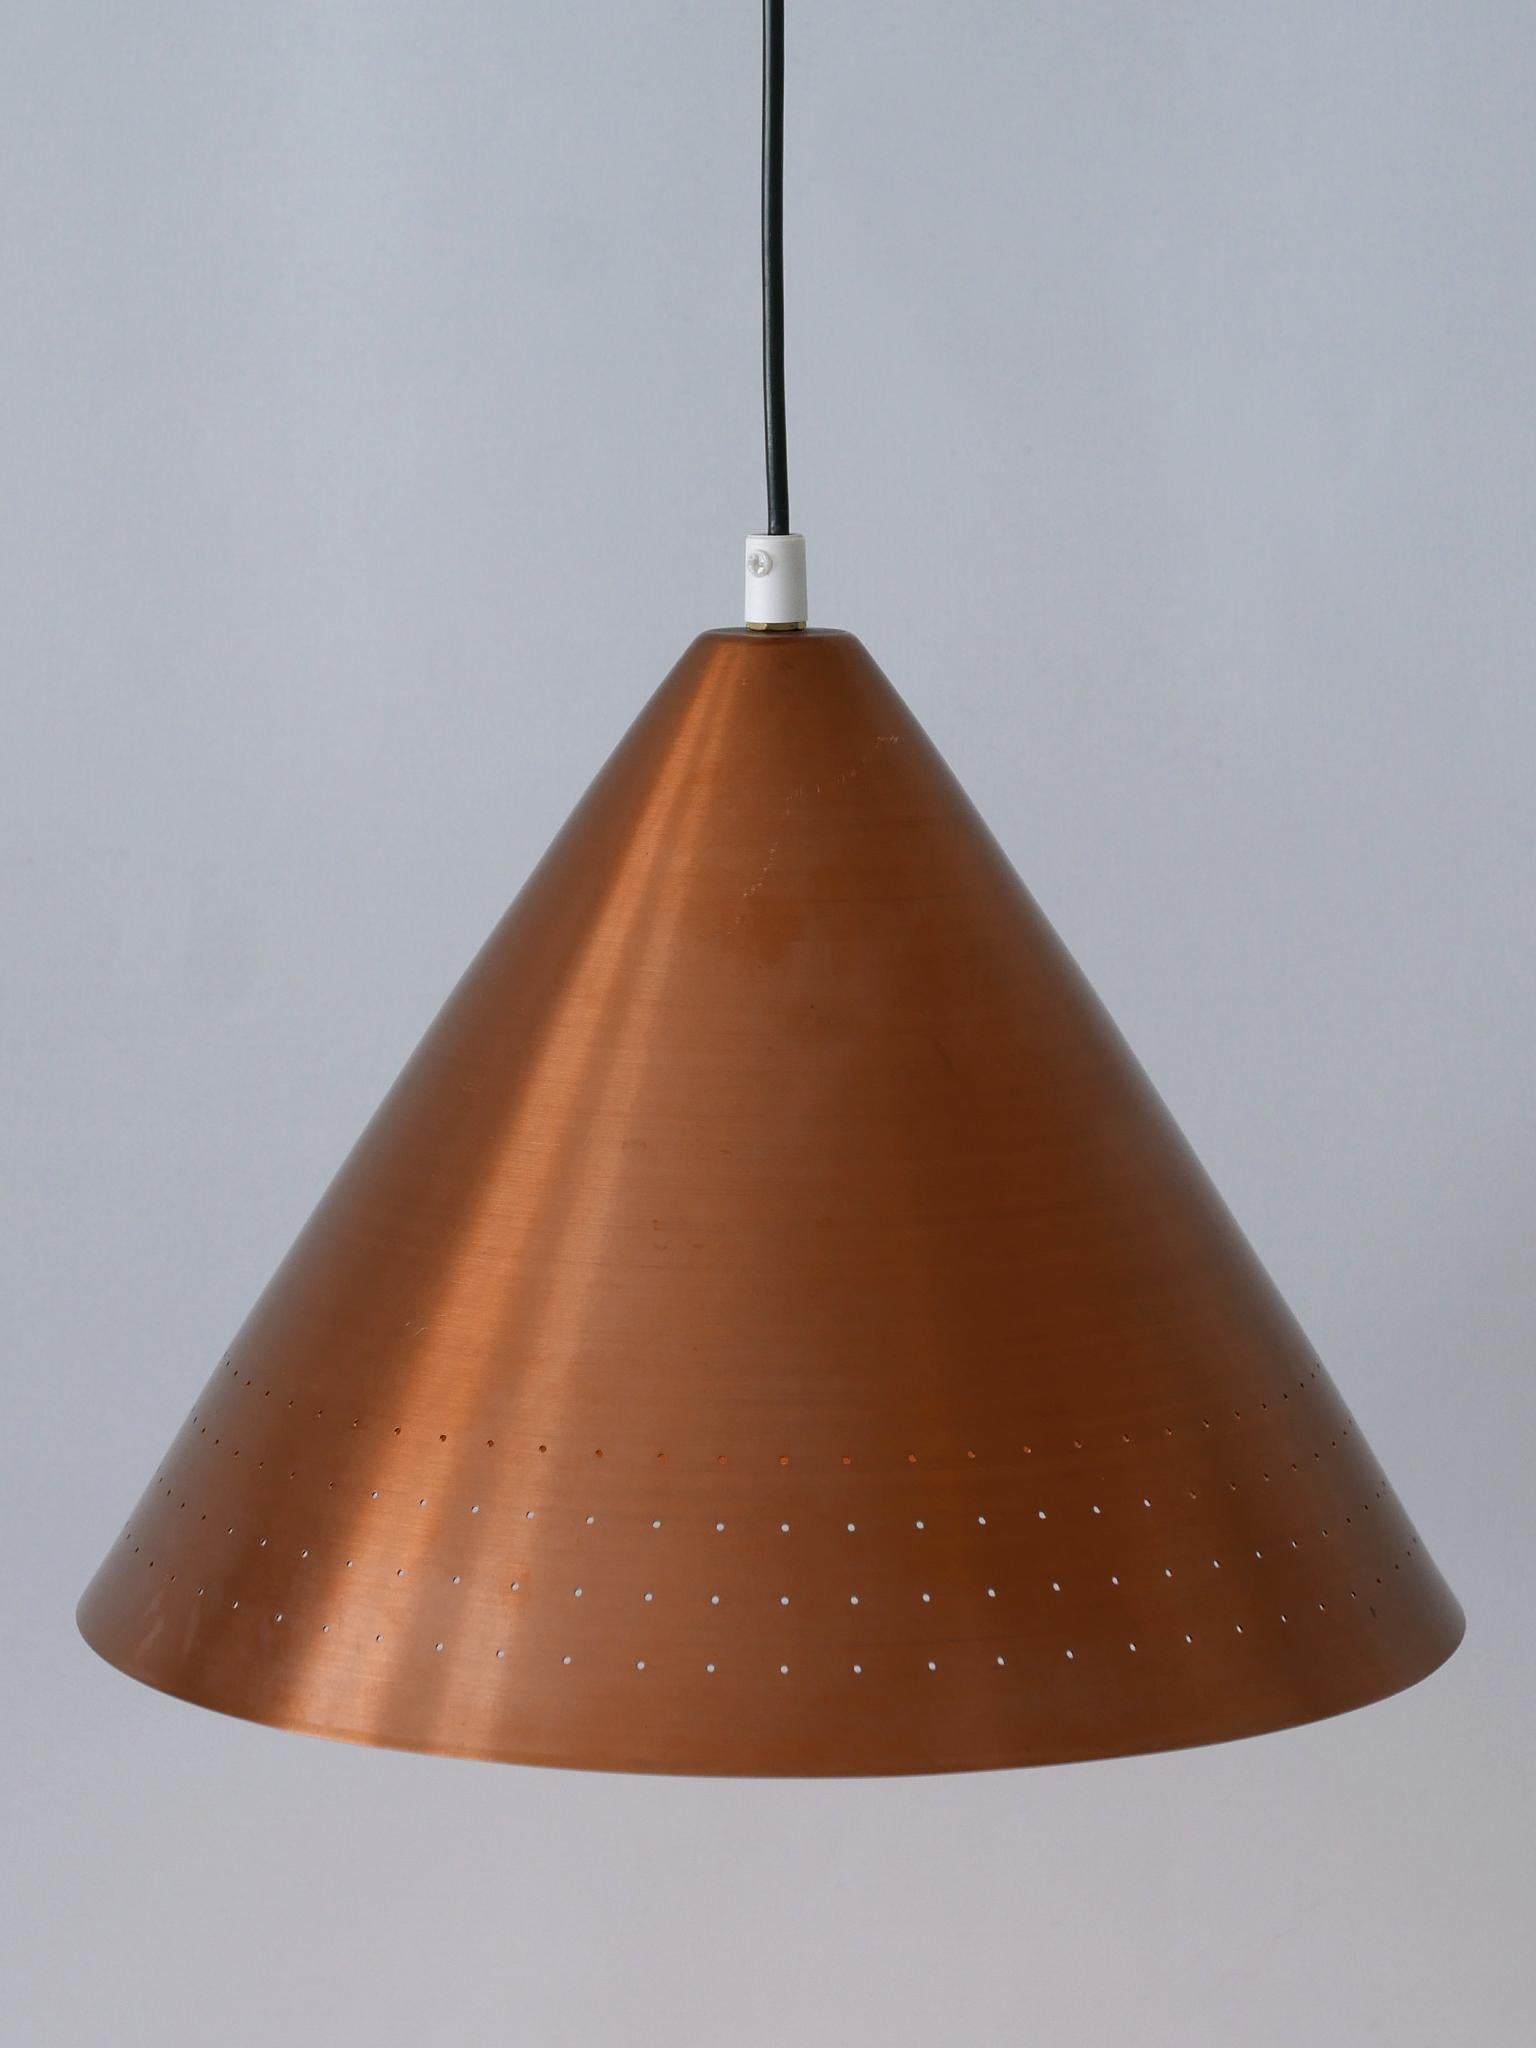 Rare Mid-Century Modern Scandinavian Copper Pendant Lamp or Hanging Light  1960s For Sale 4